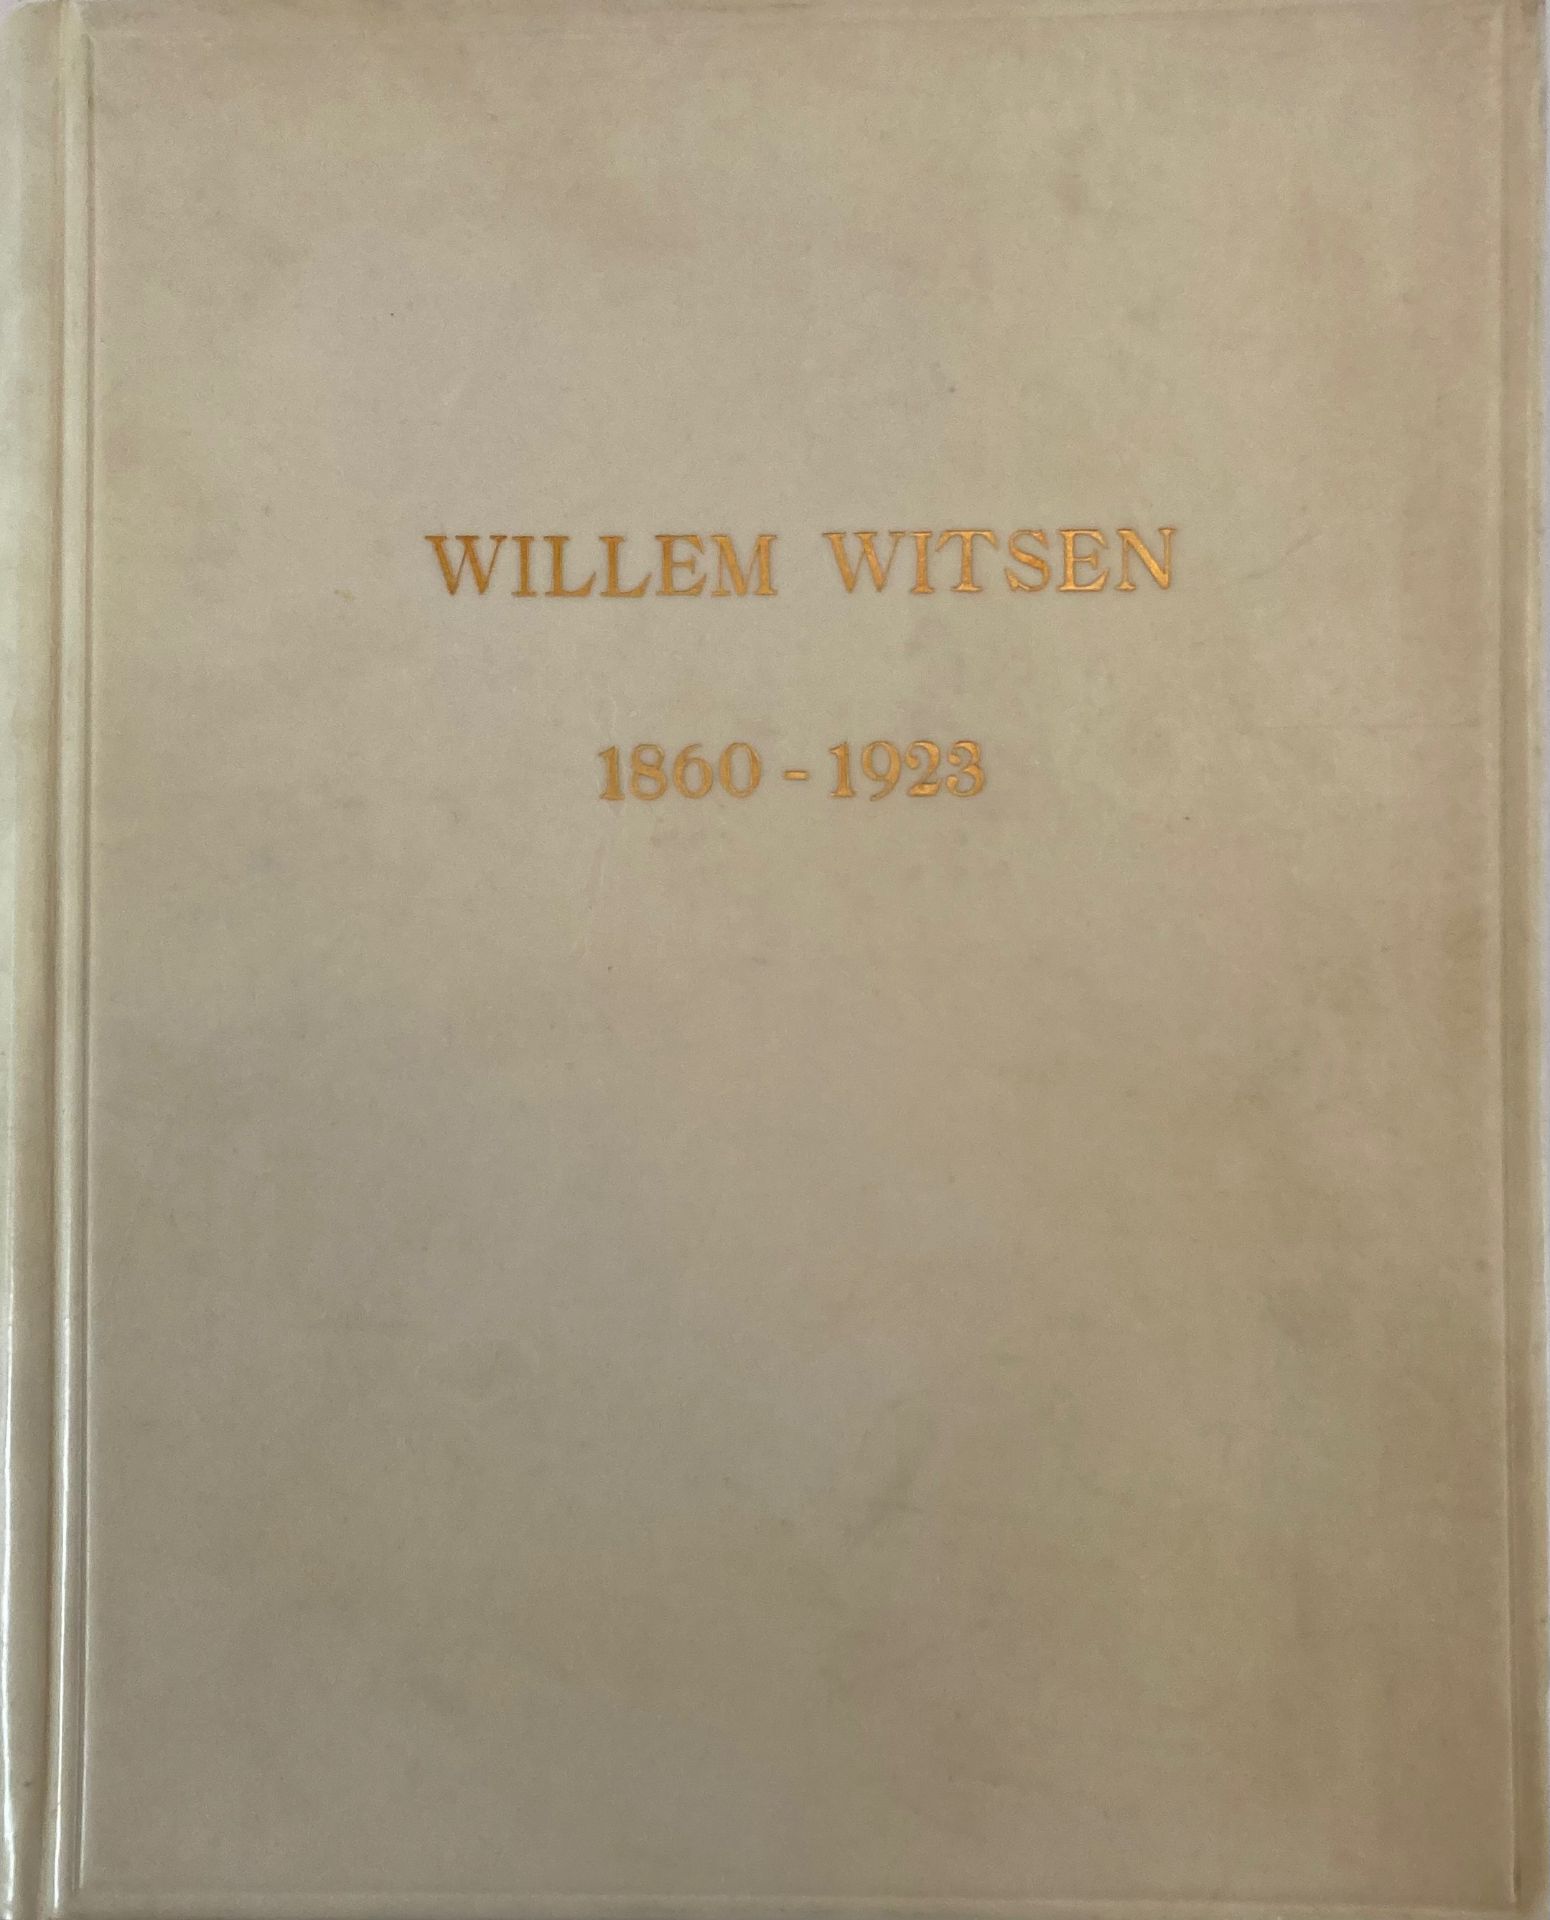 WITSEN -- HARPEN, N. v. Willem Witsen. Amst., 1924. (2), 30, (96) p